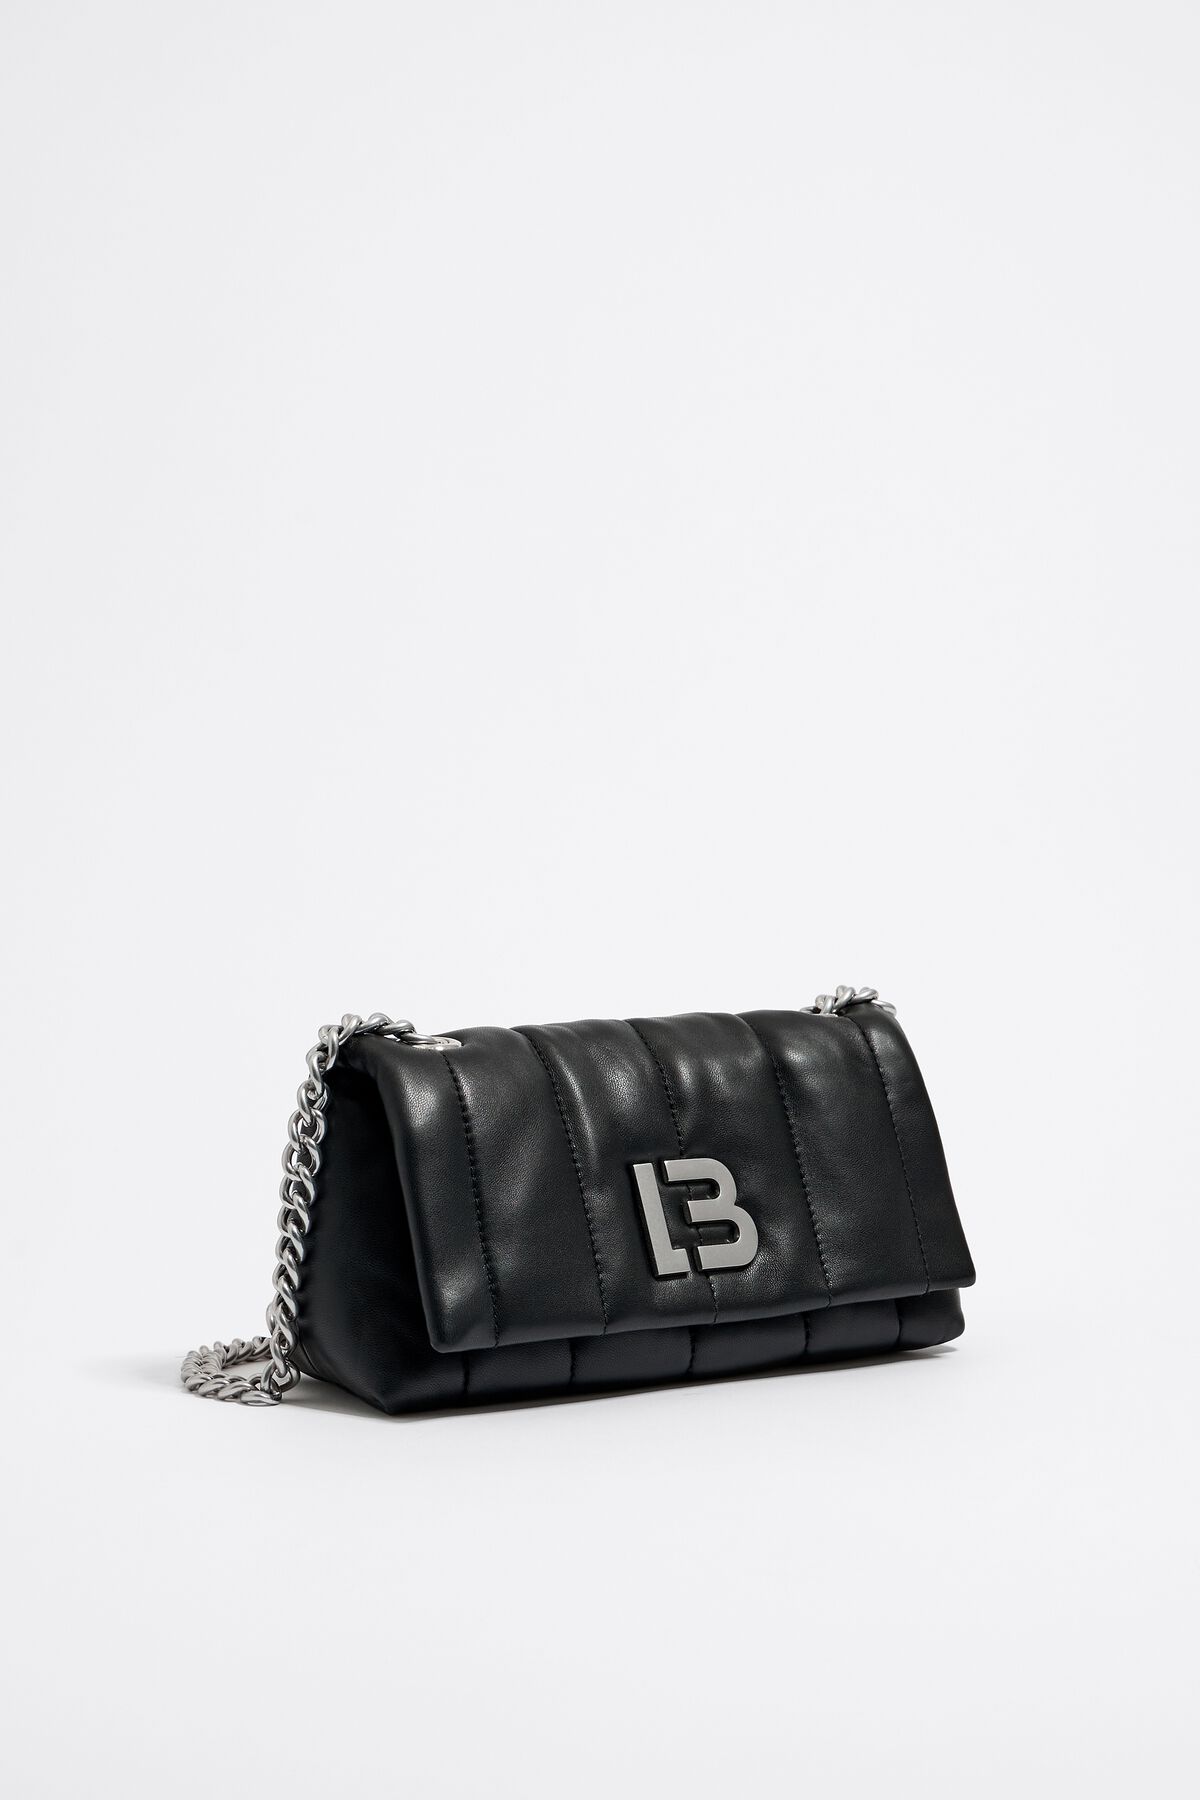 Small black nappa leather bag flap